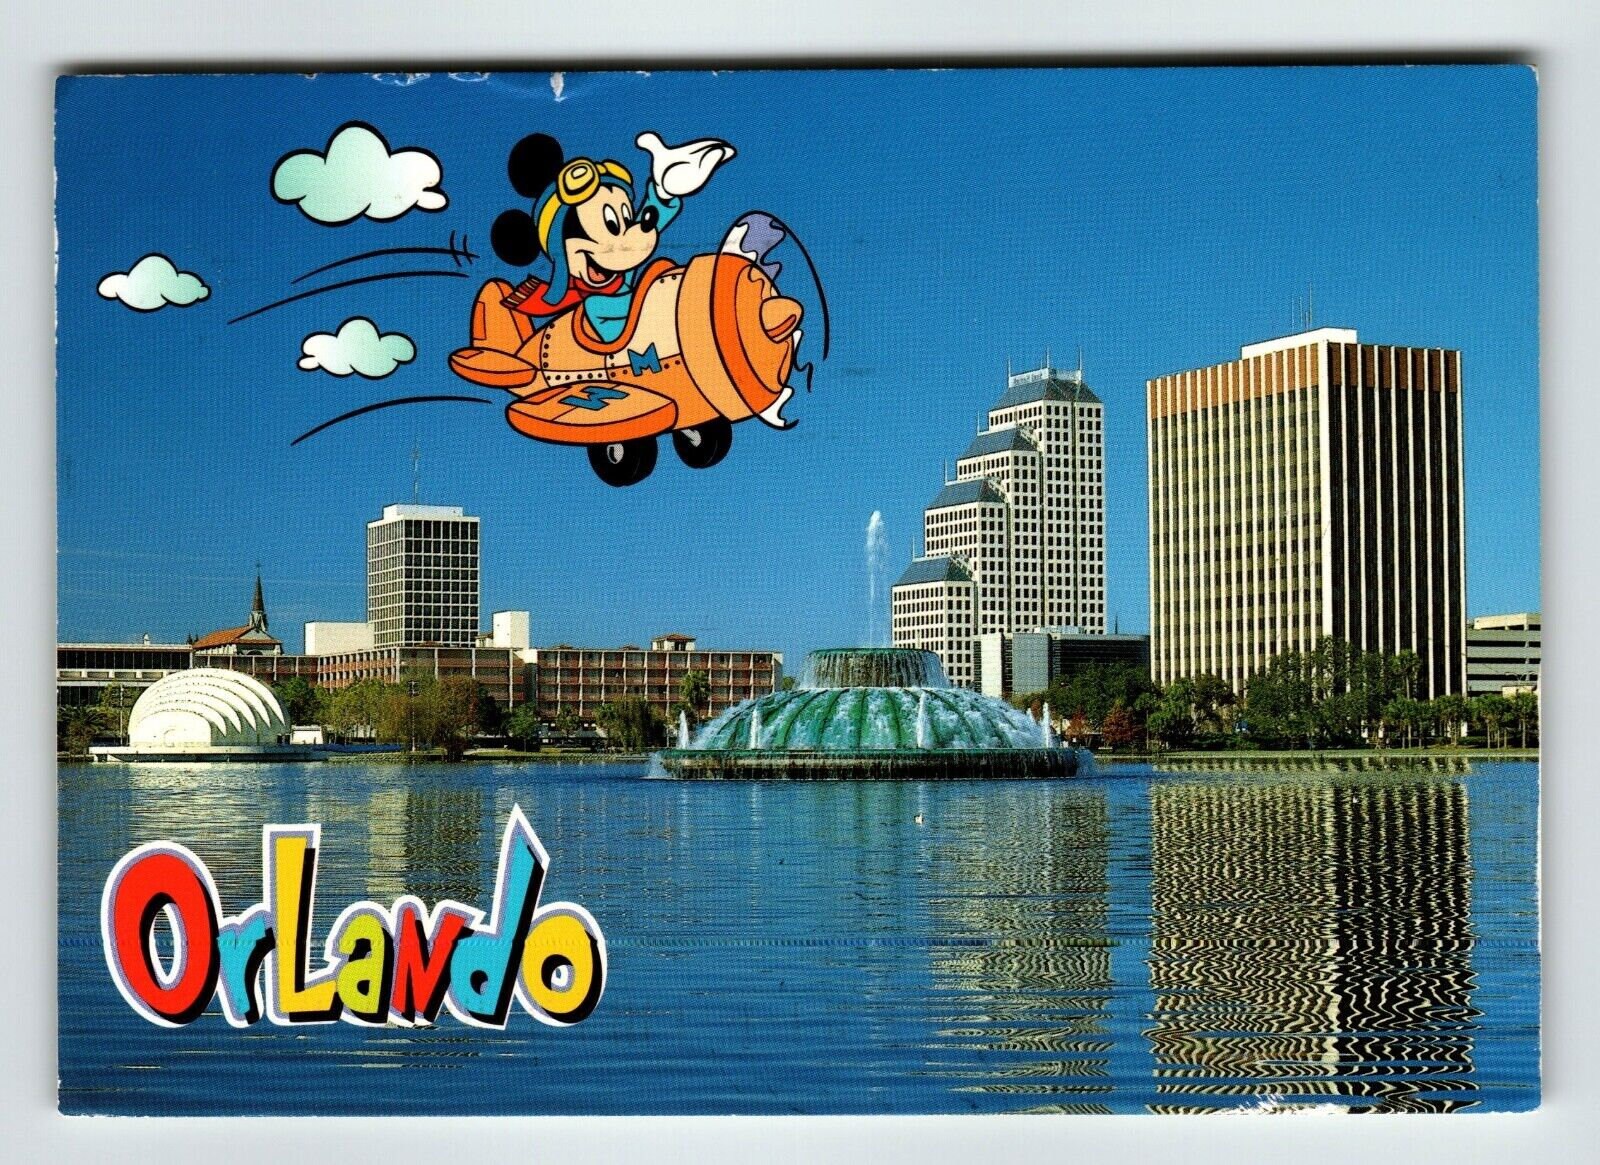 Vintage Lego Imagination Center Orlando, FL Display Postcard